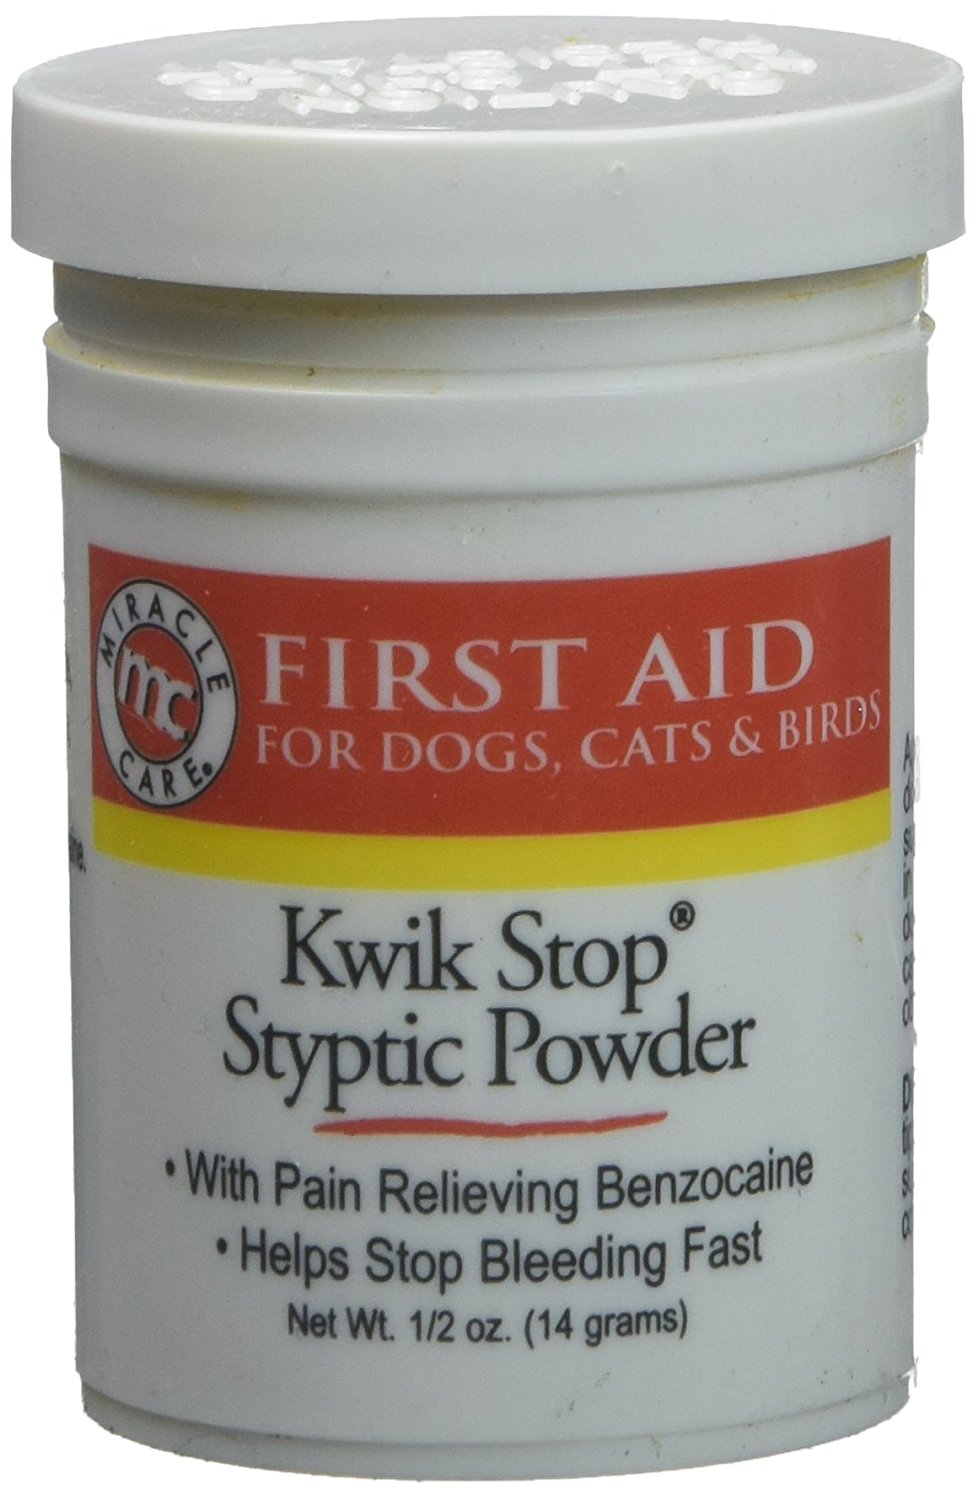 Miracle Care: Kwik Stop Styptic Powder